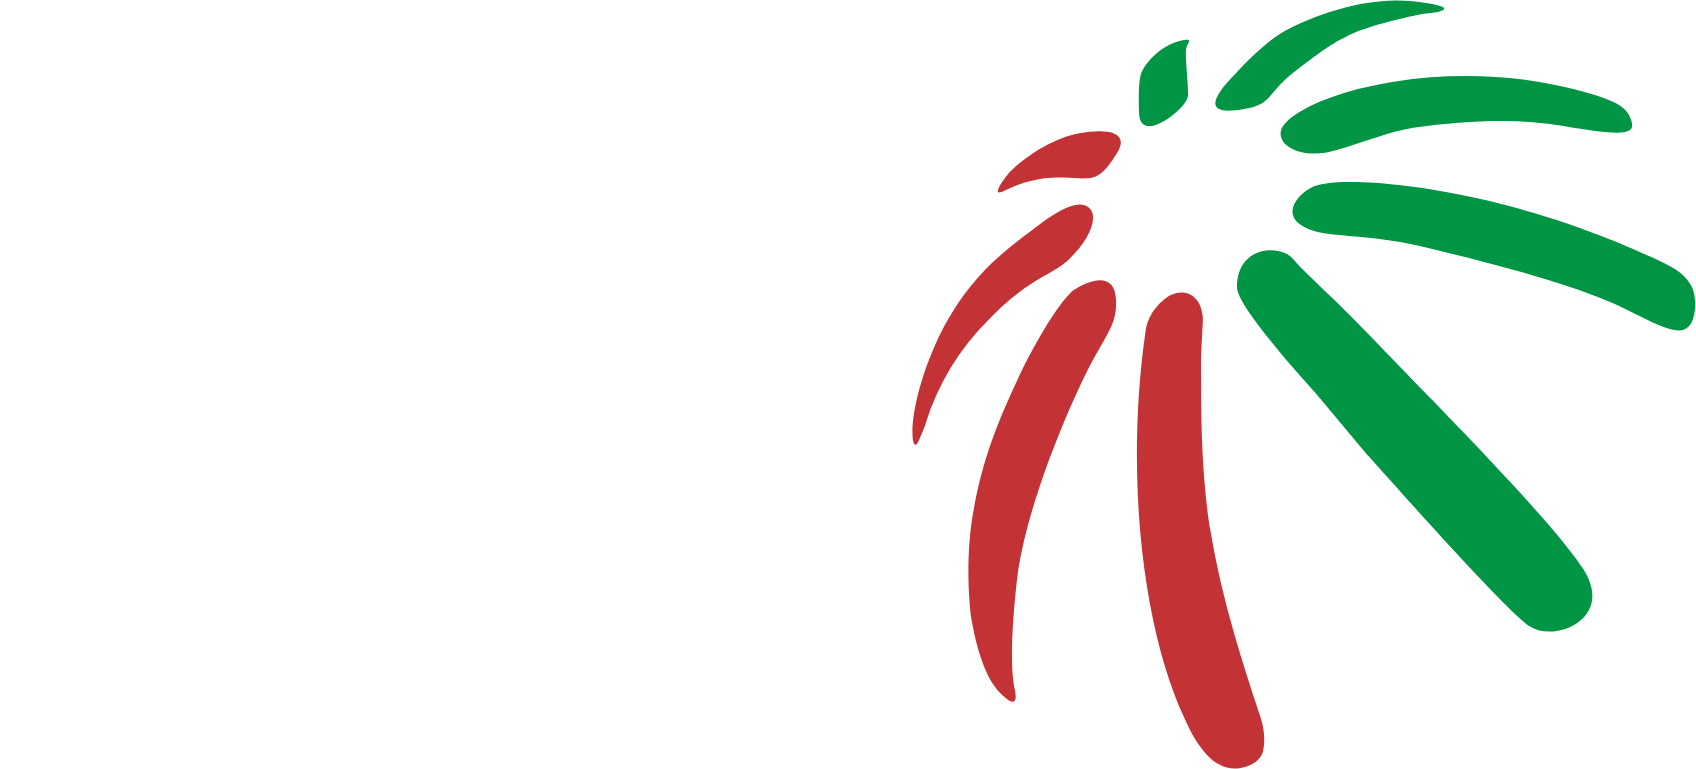 Petro Rabigh
 Logo groß für dunkle Hintergründe (transparentes PNG)